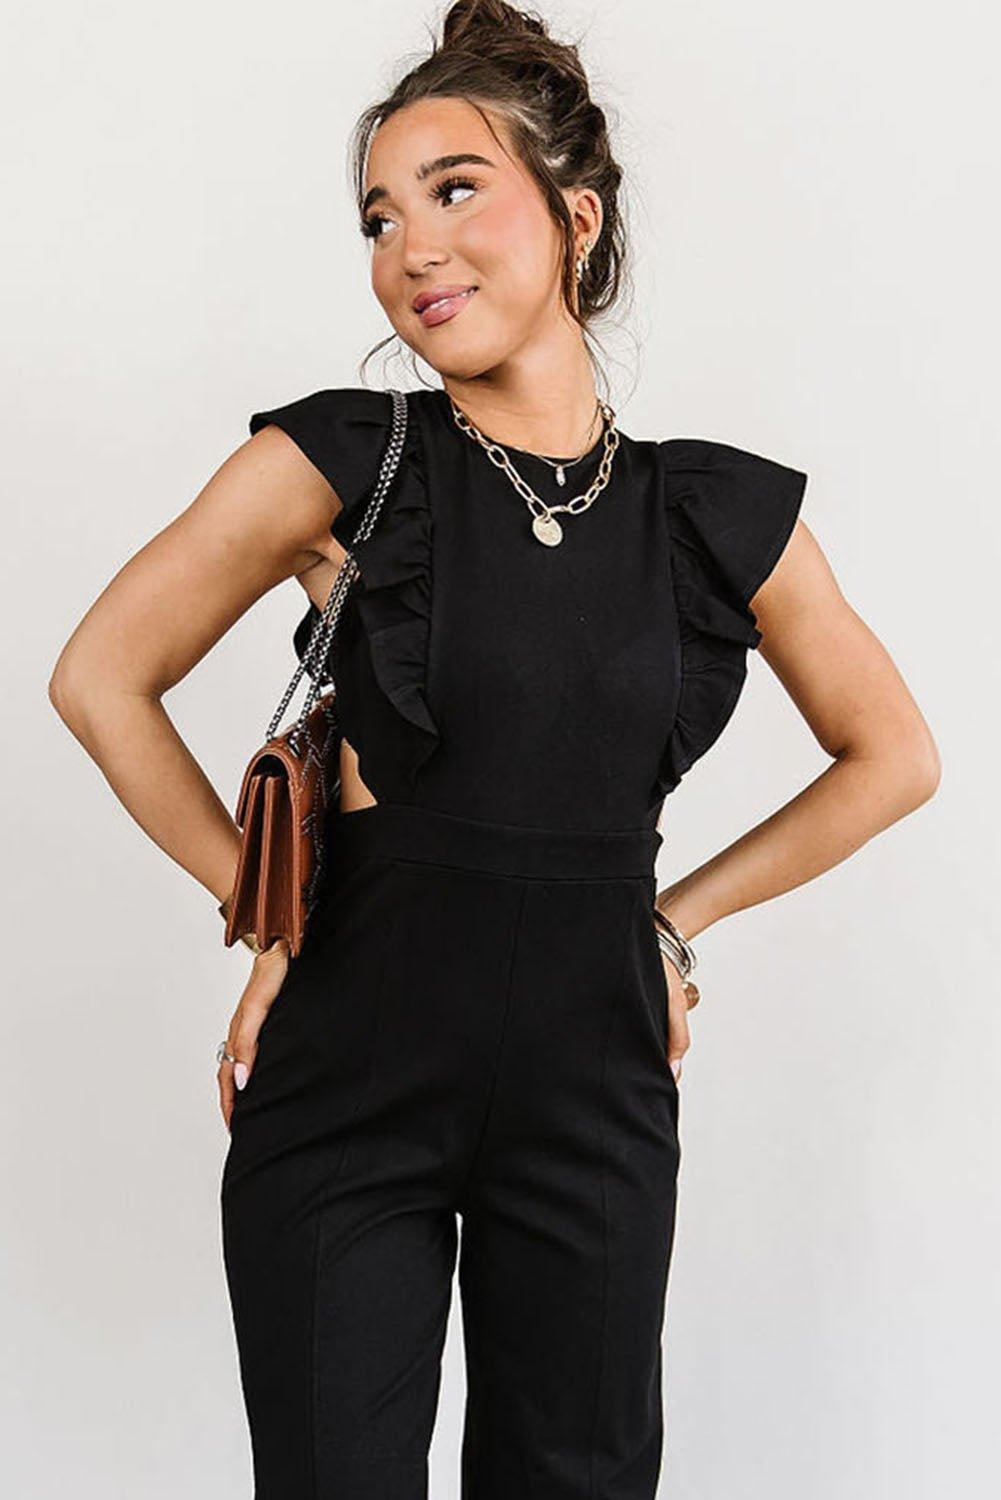 Black Ruffle Cut-Out Sleeve Jumper - Klazzi Fashion Boutique